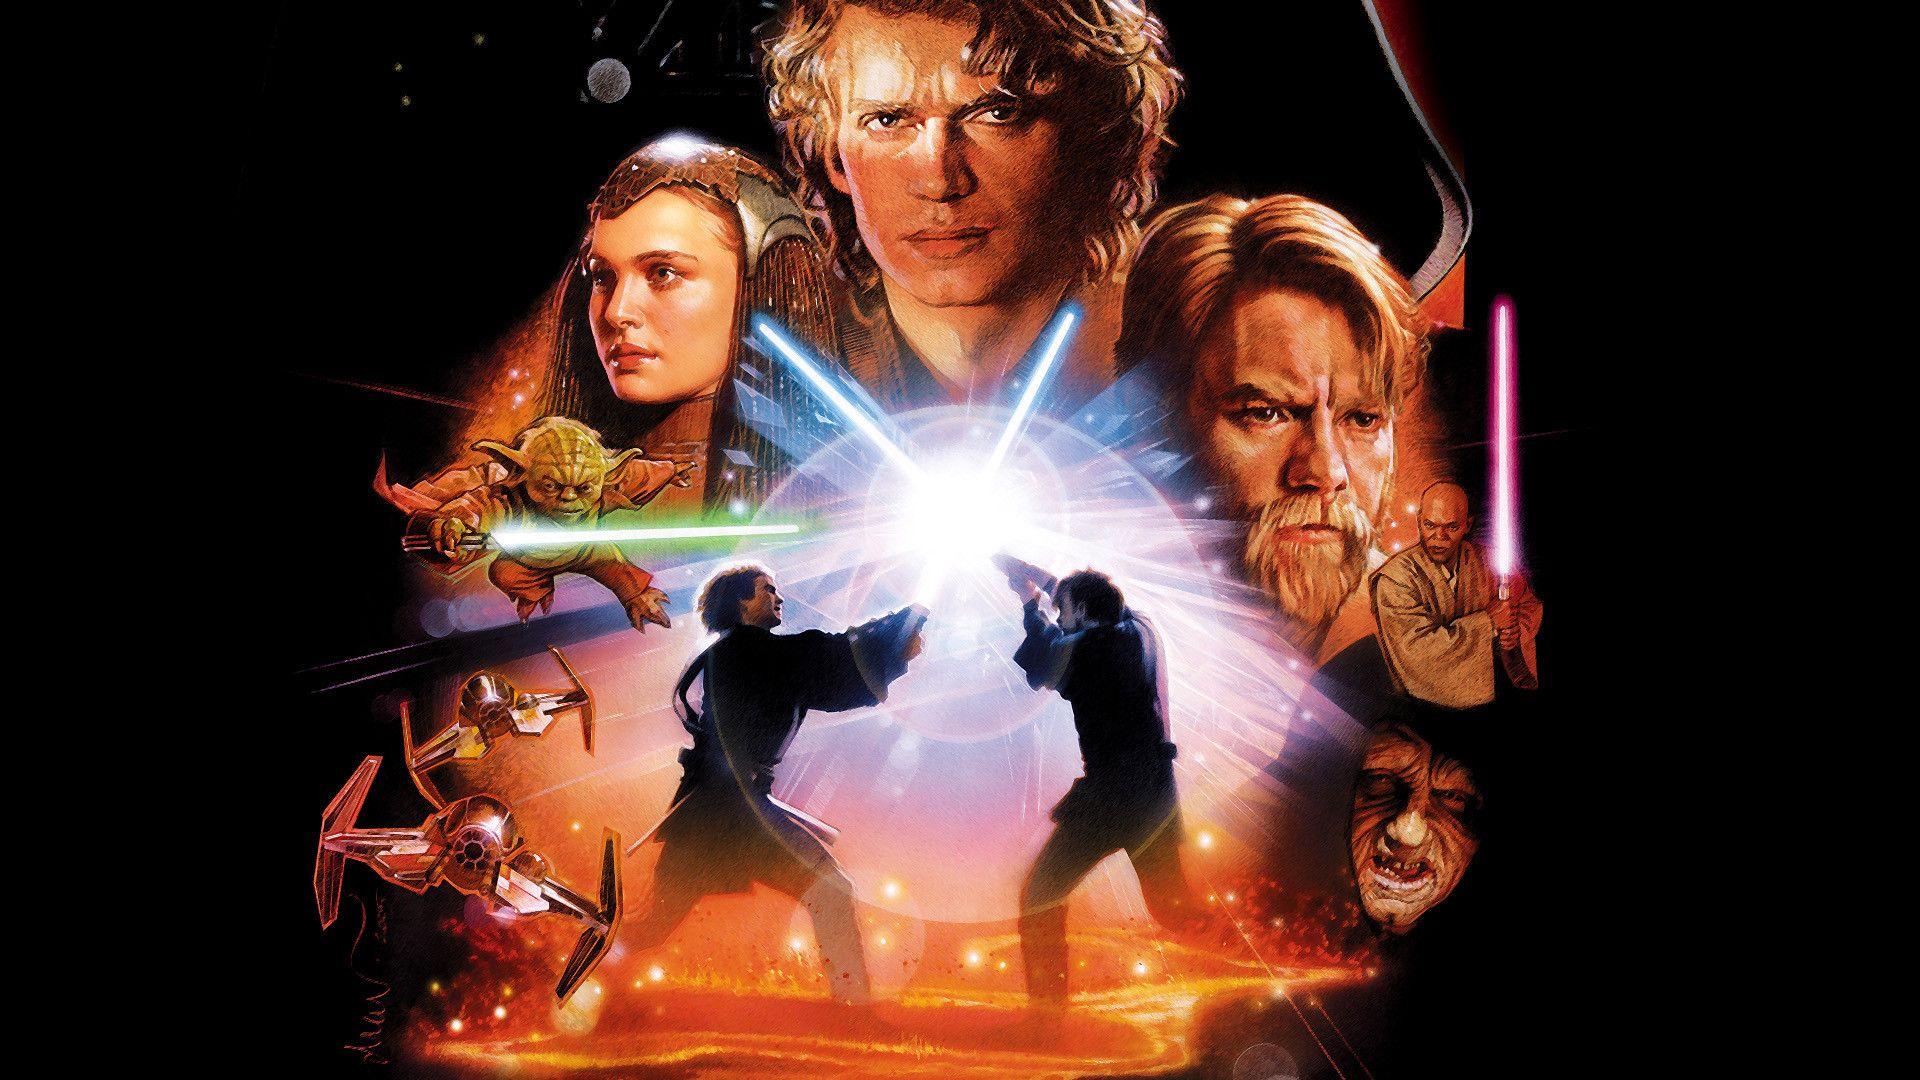 Star Wars Ep. III: Revenge of the Sith free downloads